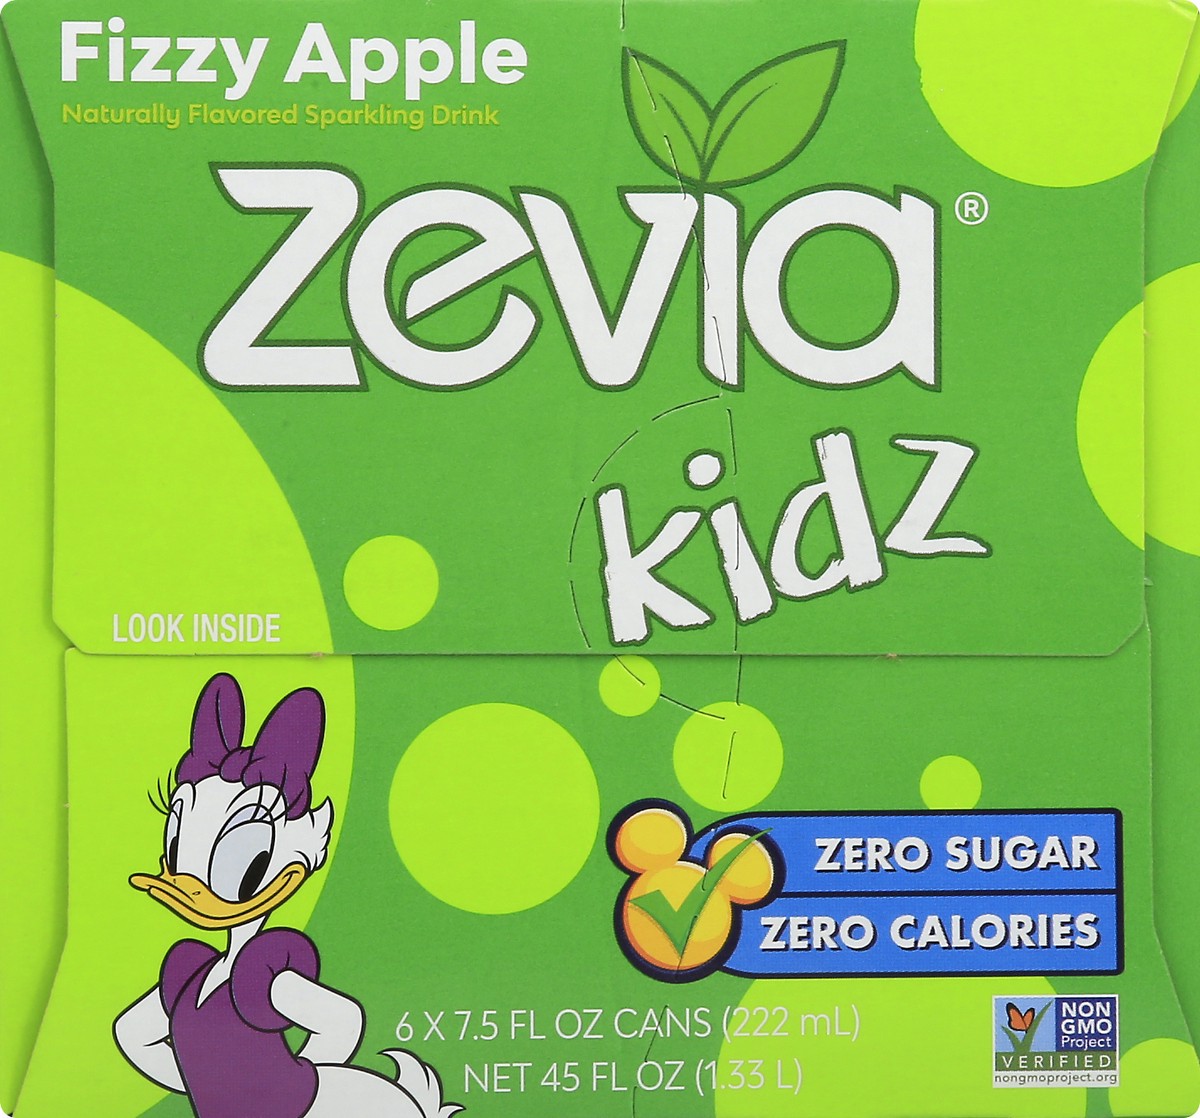 slide 7 of 9, Zevia Kidz Disney Fizzy Apple Sparkling Drink 6 - 7.5 fl oz Cans, 45 fl oz